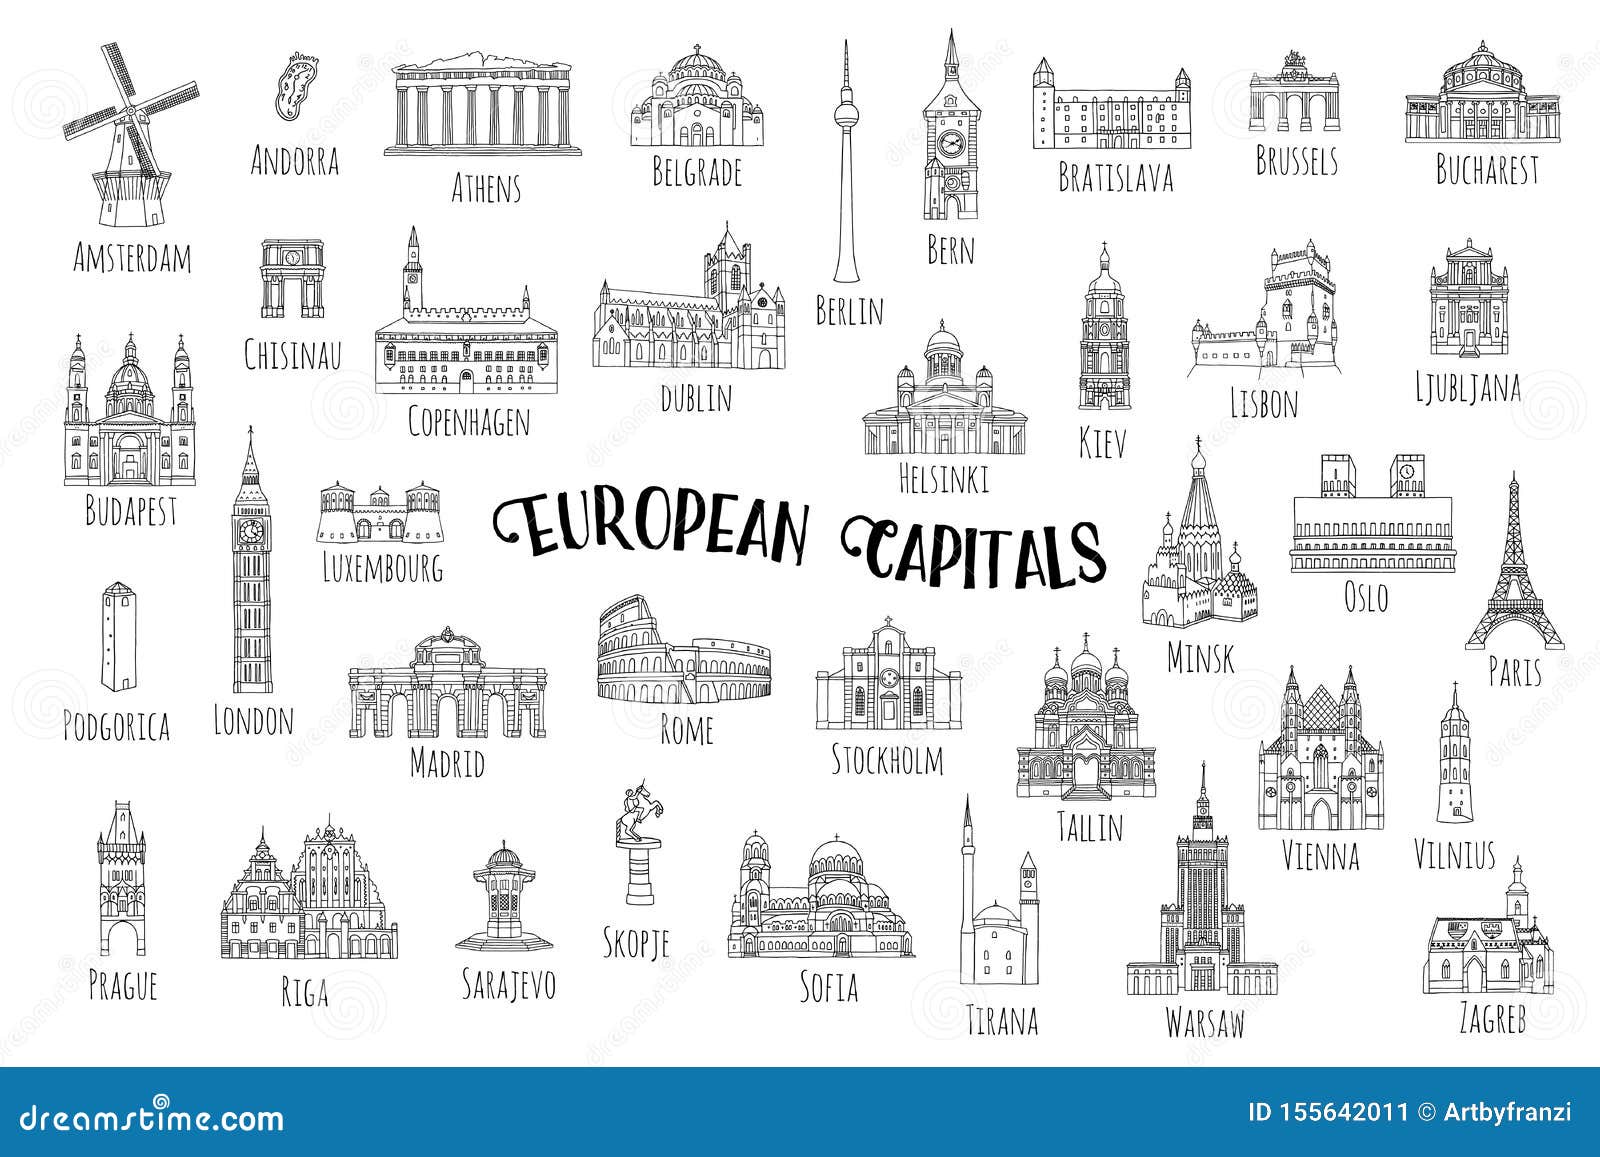 37 landmarks from european capitals